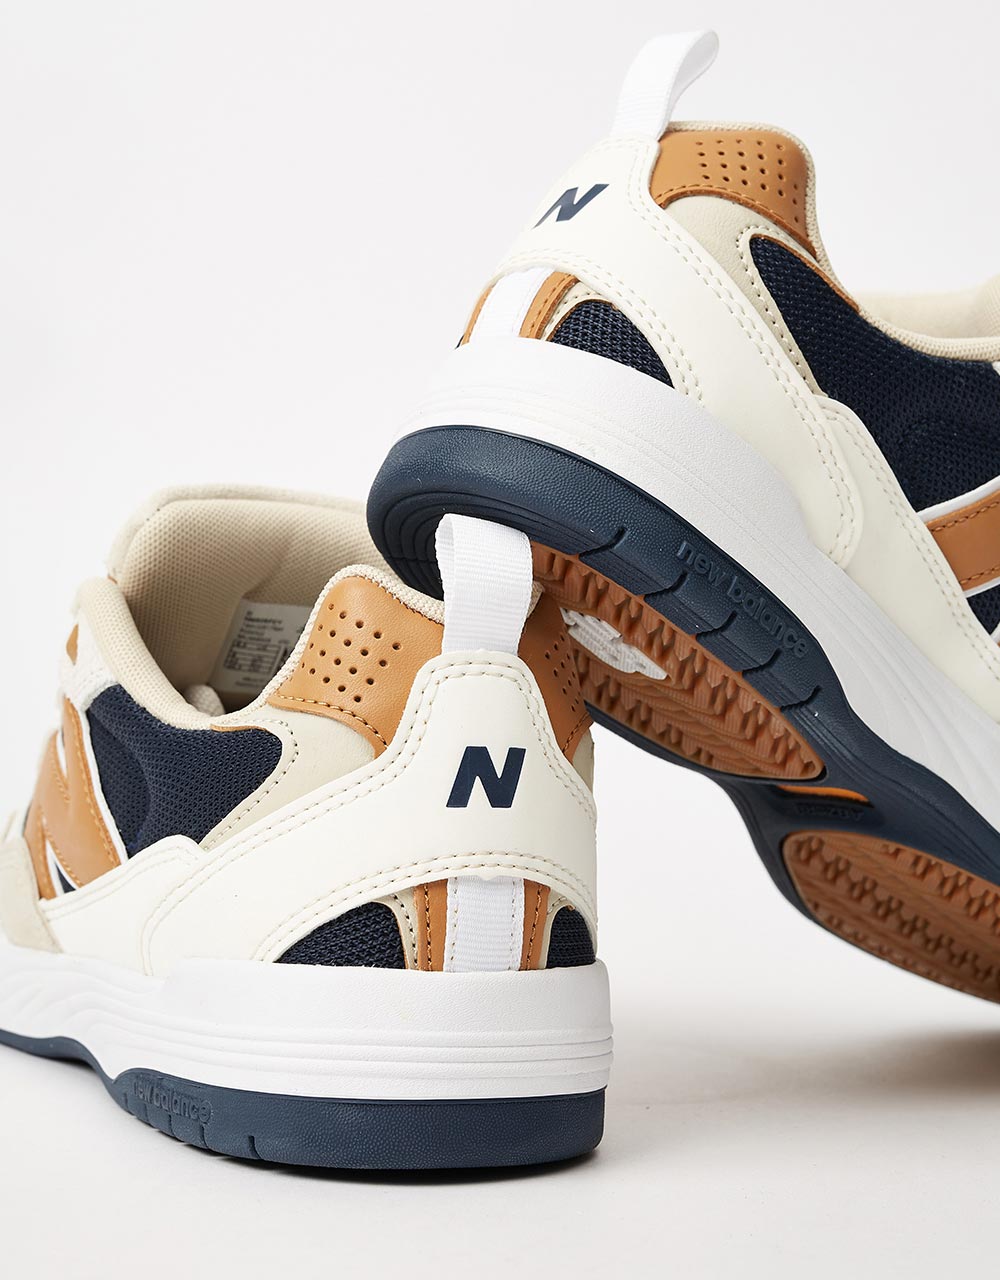 New Balance Numeric 808 Skate Shoes - Tan/Navy